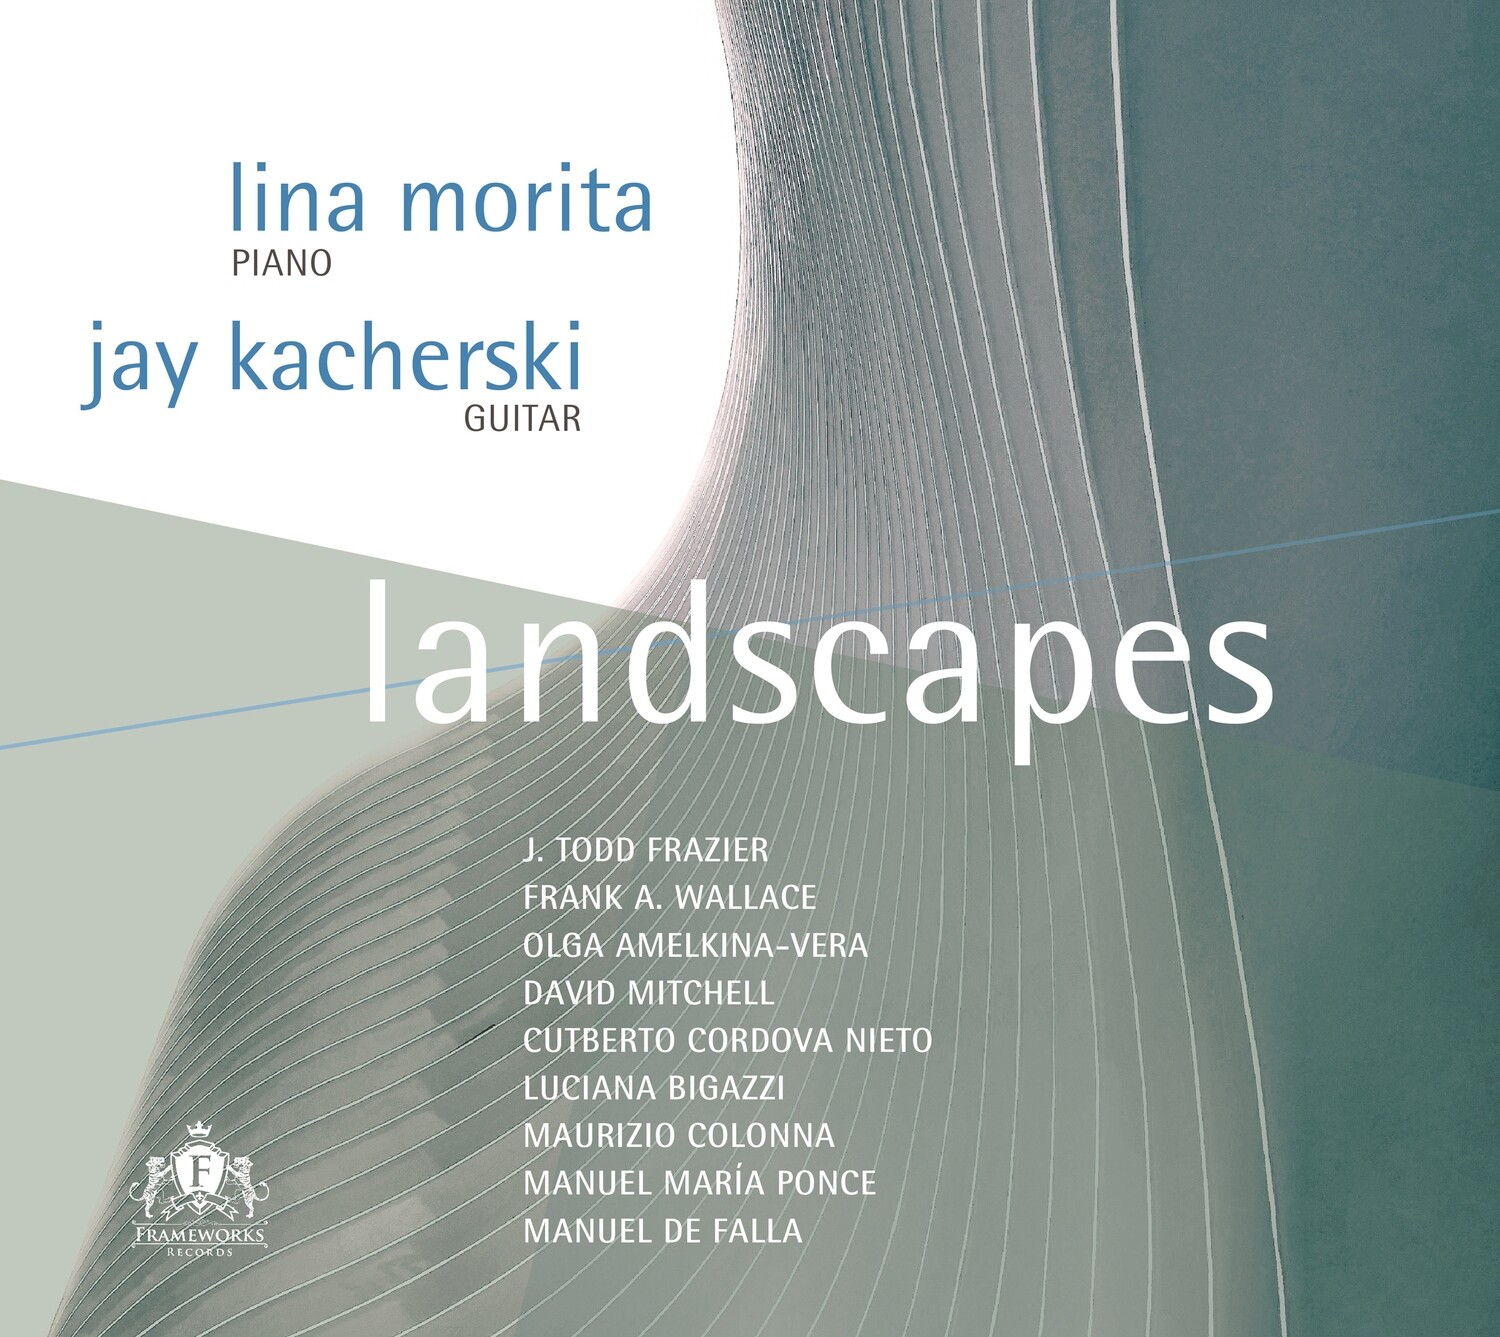 Jay Kacherski and Lina Morita - Landscapes - PHYSICAL - USA ORDER - (Personalized - Signed)